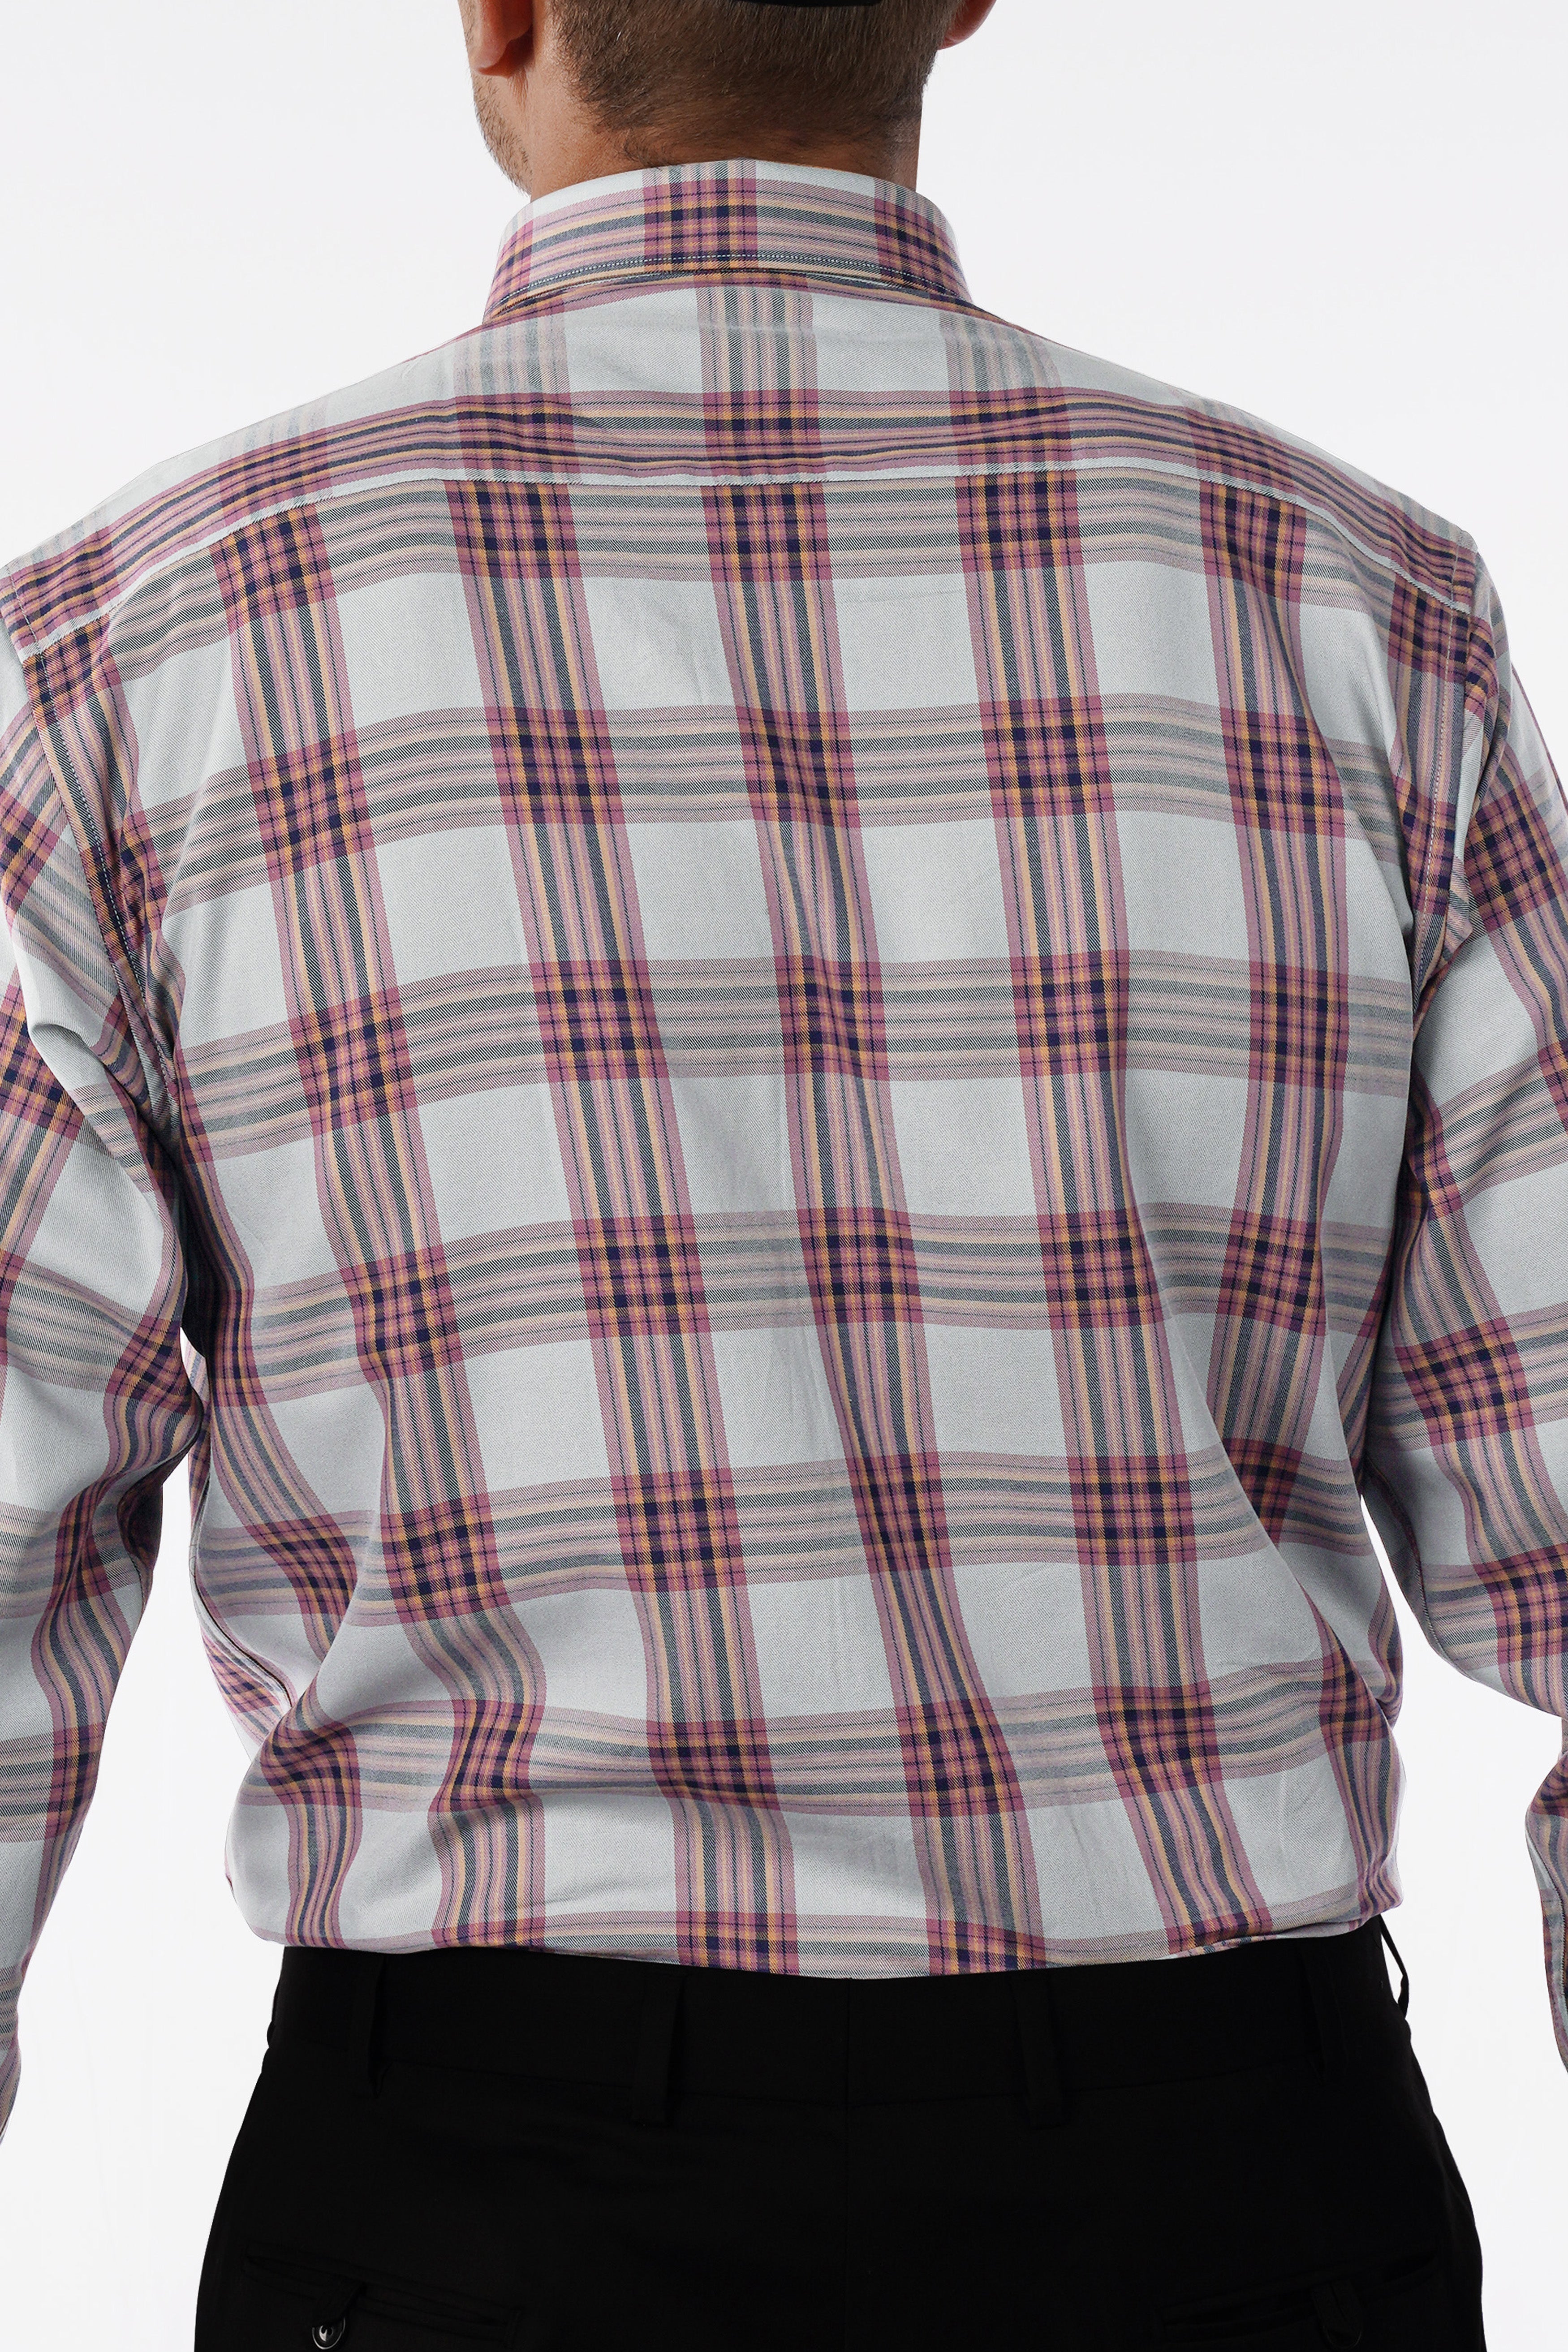 Lauguid Gray with Fuchsia Pink Twill Plaid Premium Cotton Shirt